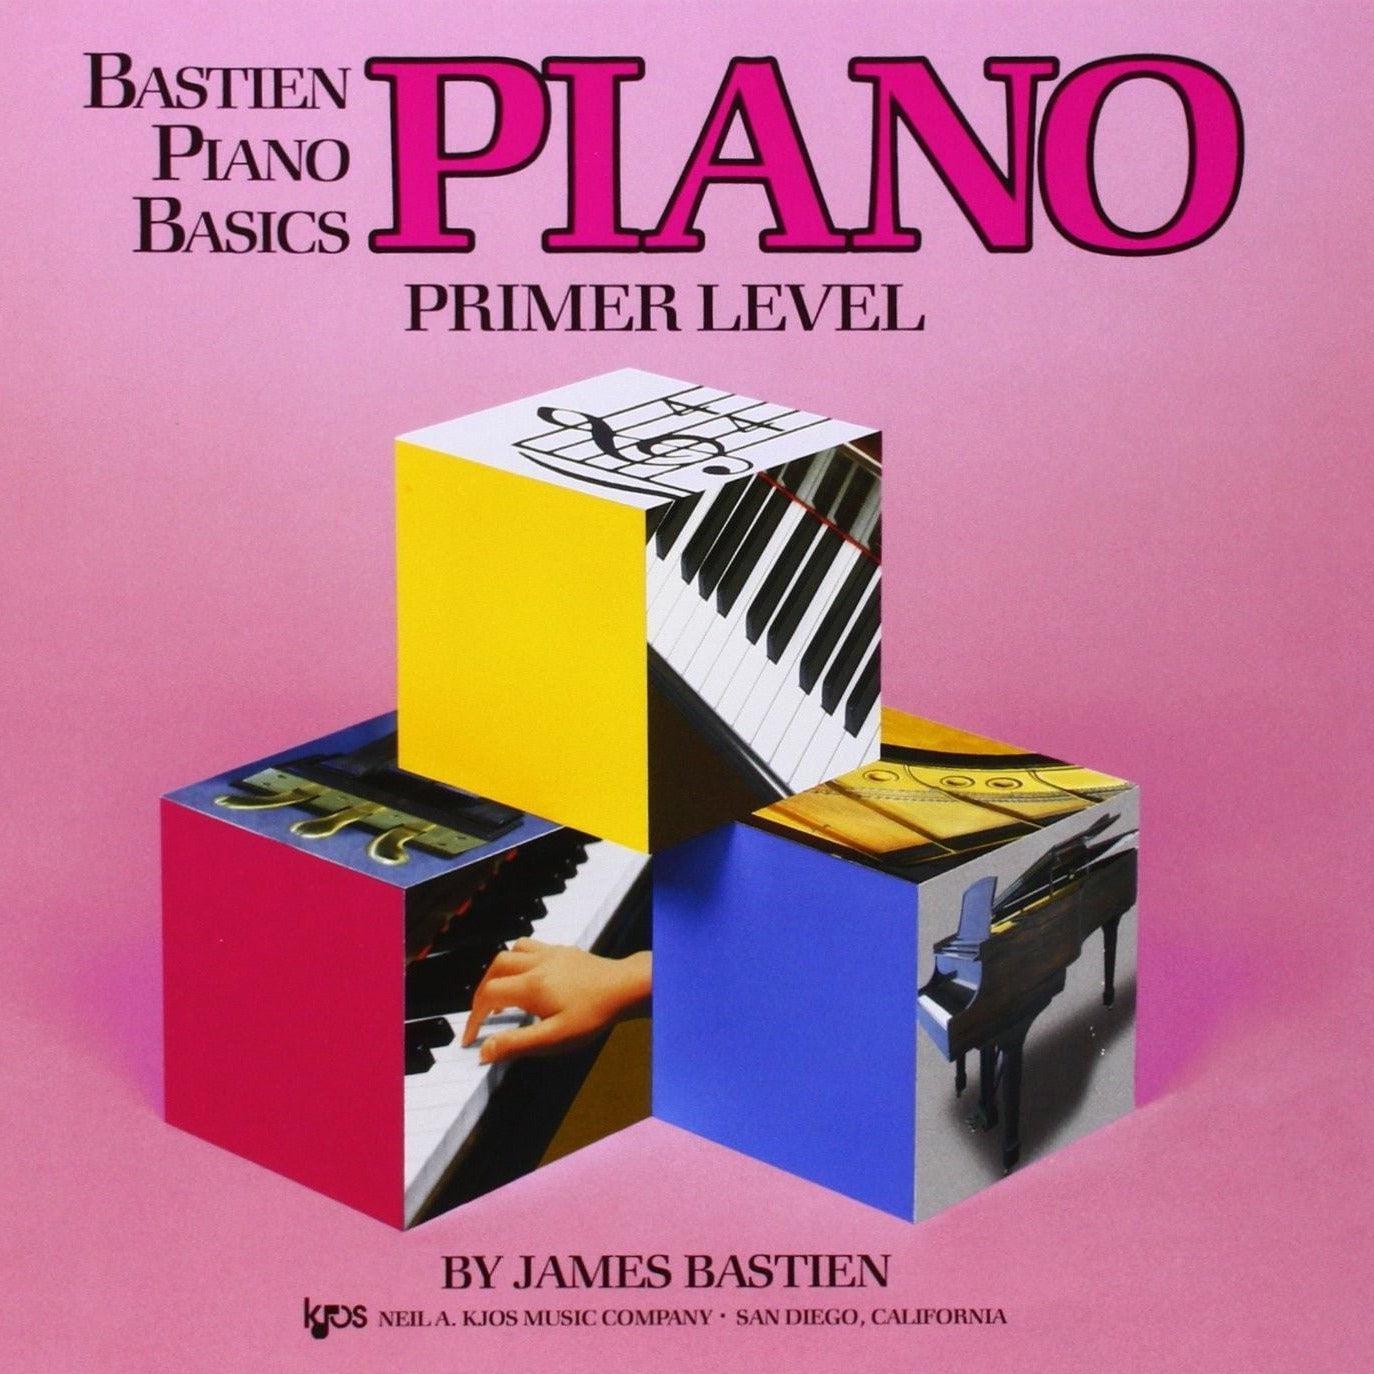 Bastien Piano Basics | Primer Level